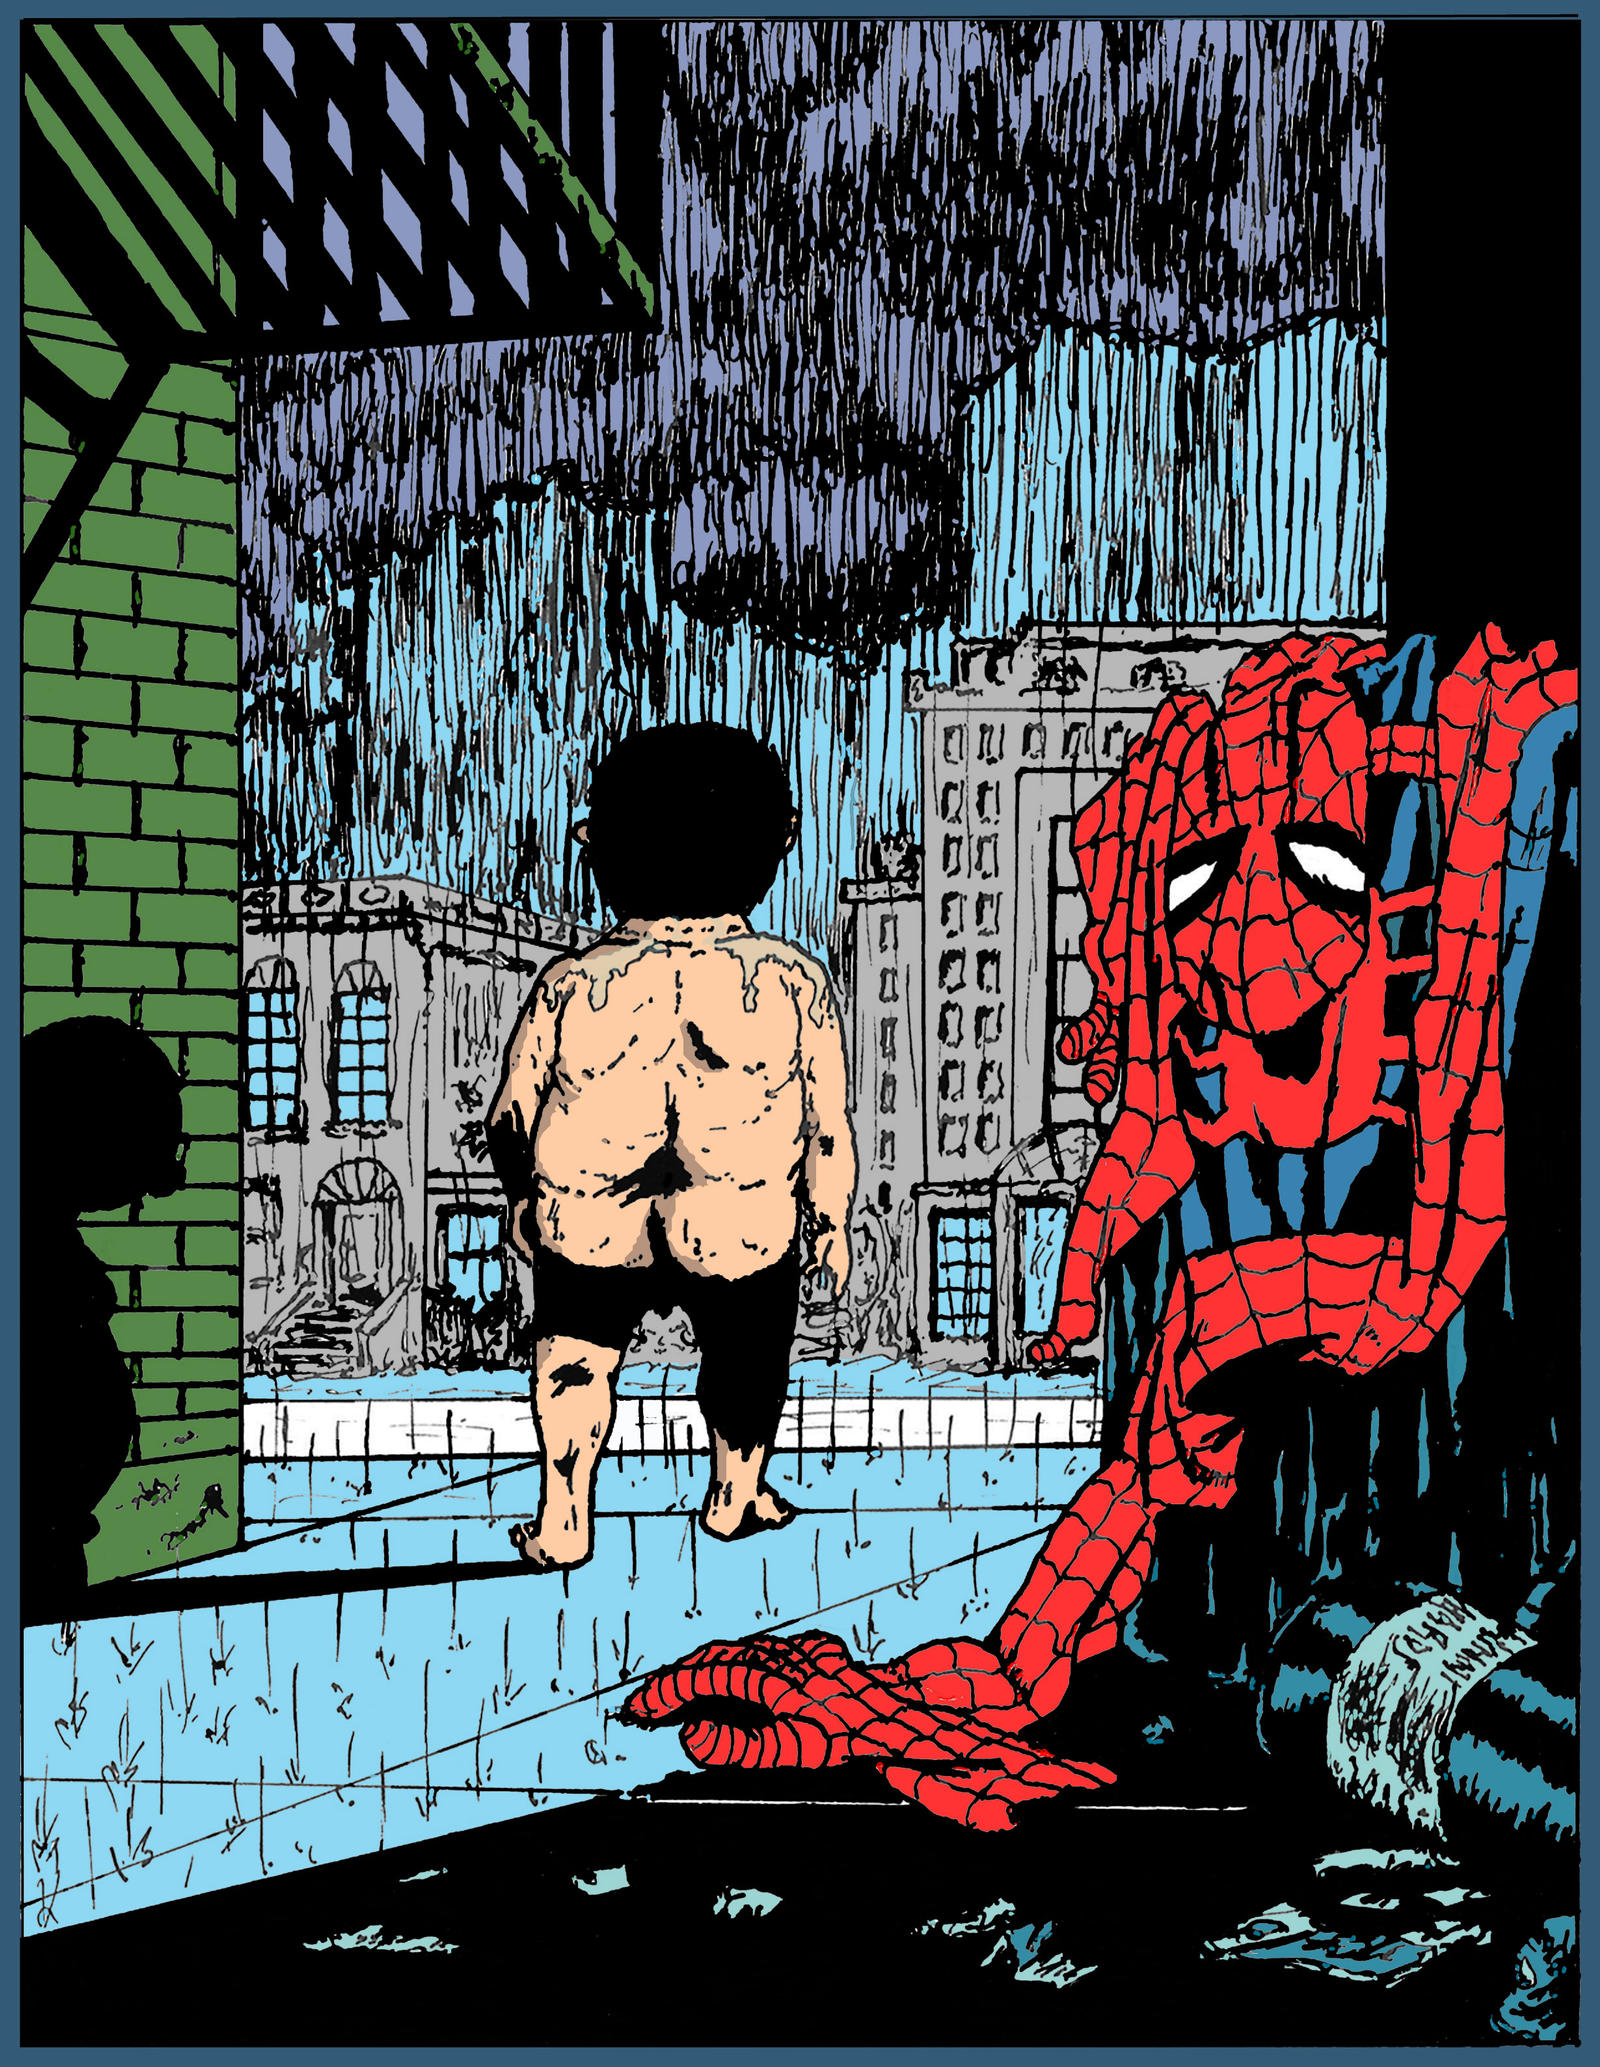 Spider-Man No More! [color version] by WinniGerhards on DeviantArt